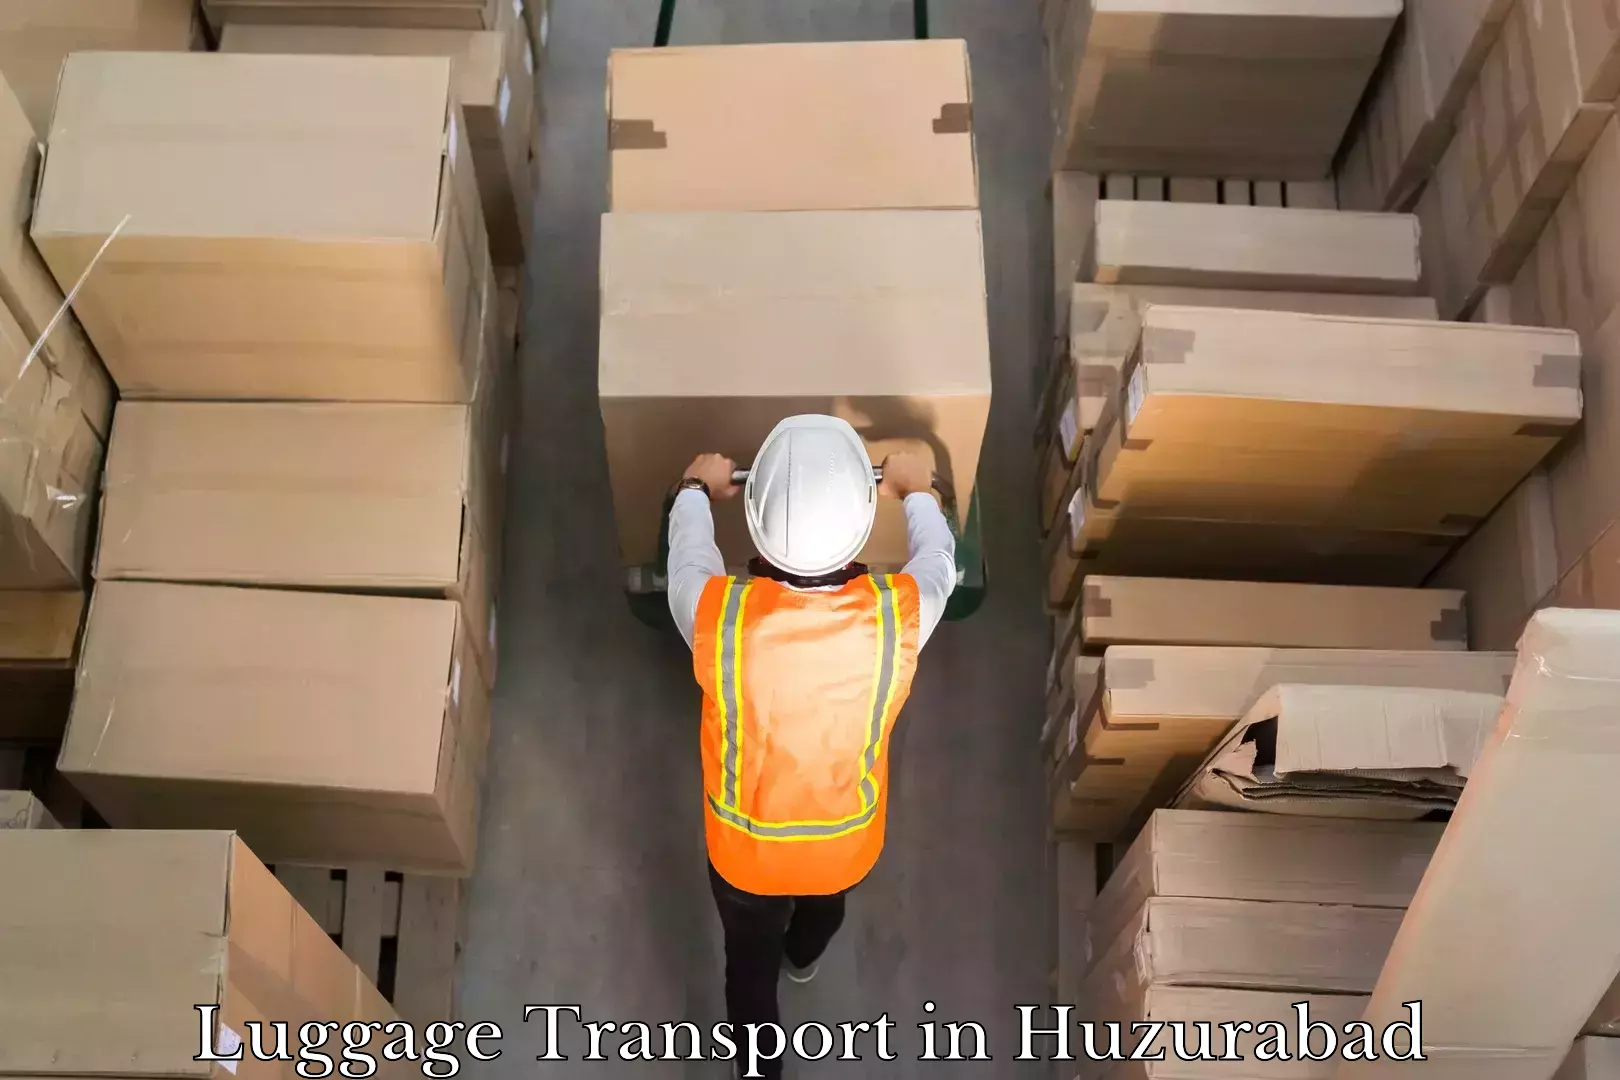 Luggage transit service in Huzurabad